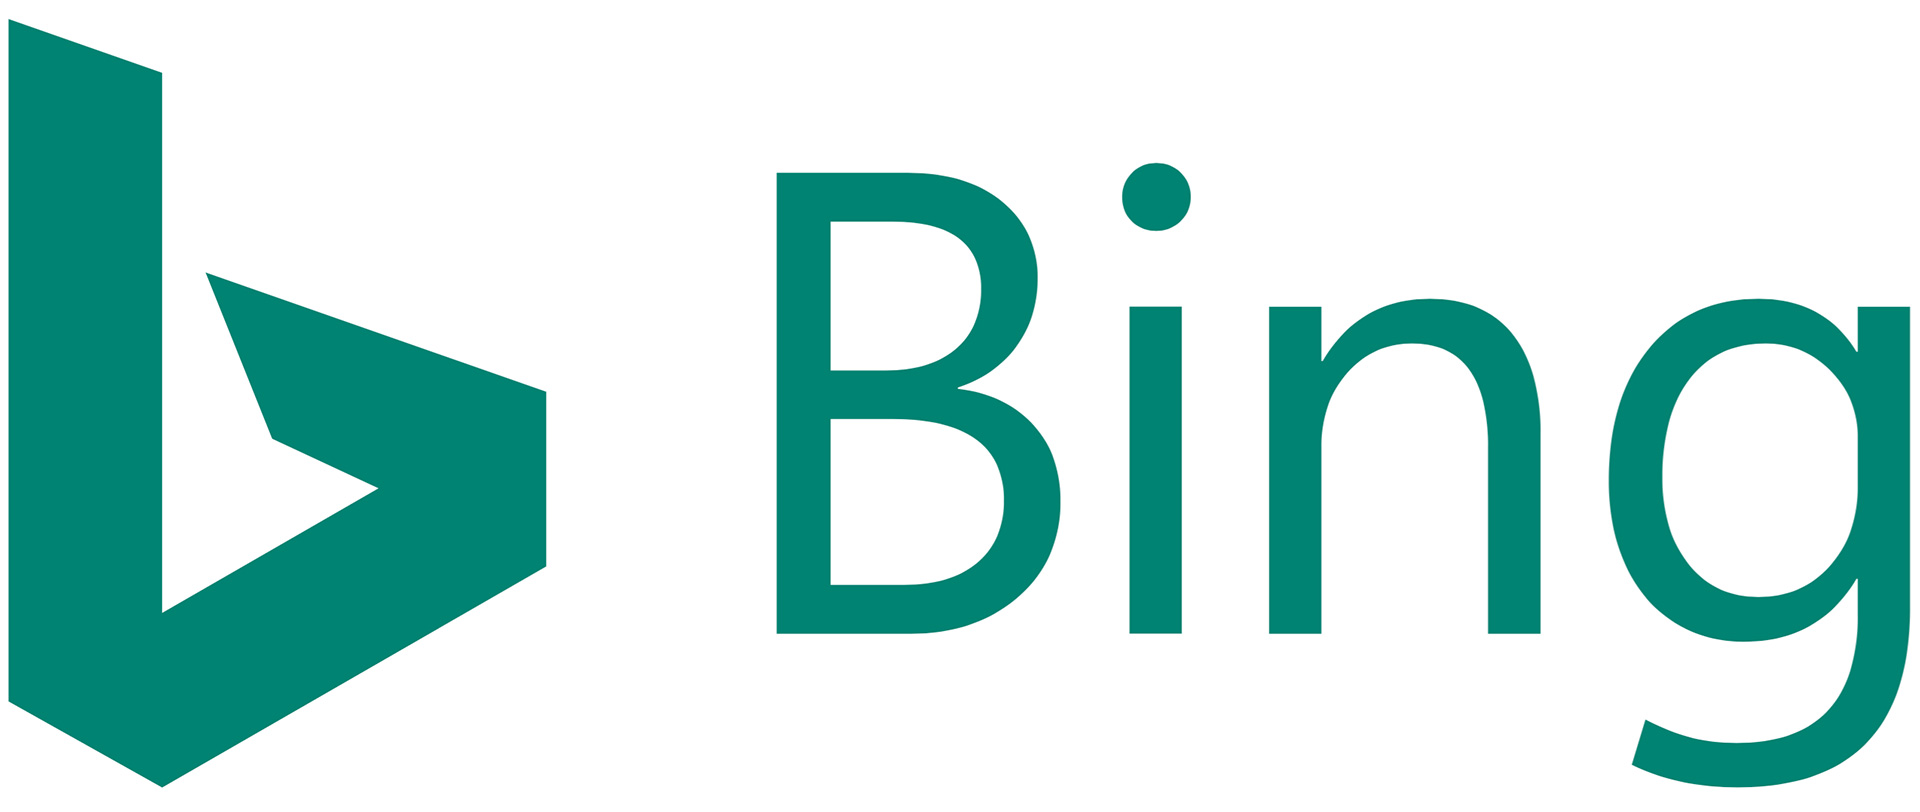 Bing engine